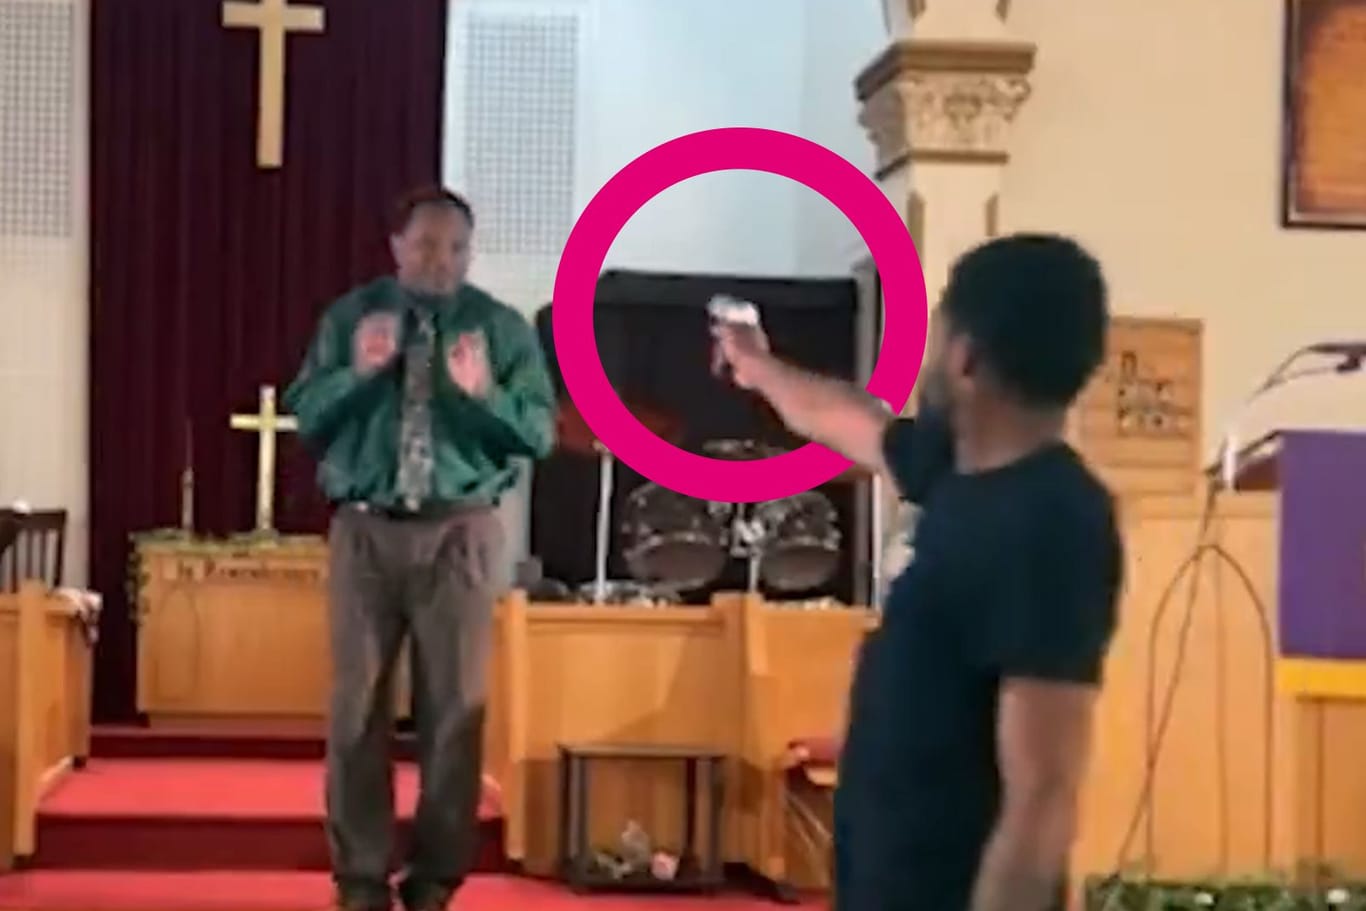 Pastor mit Waffe bedroht